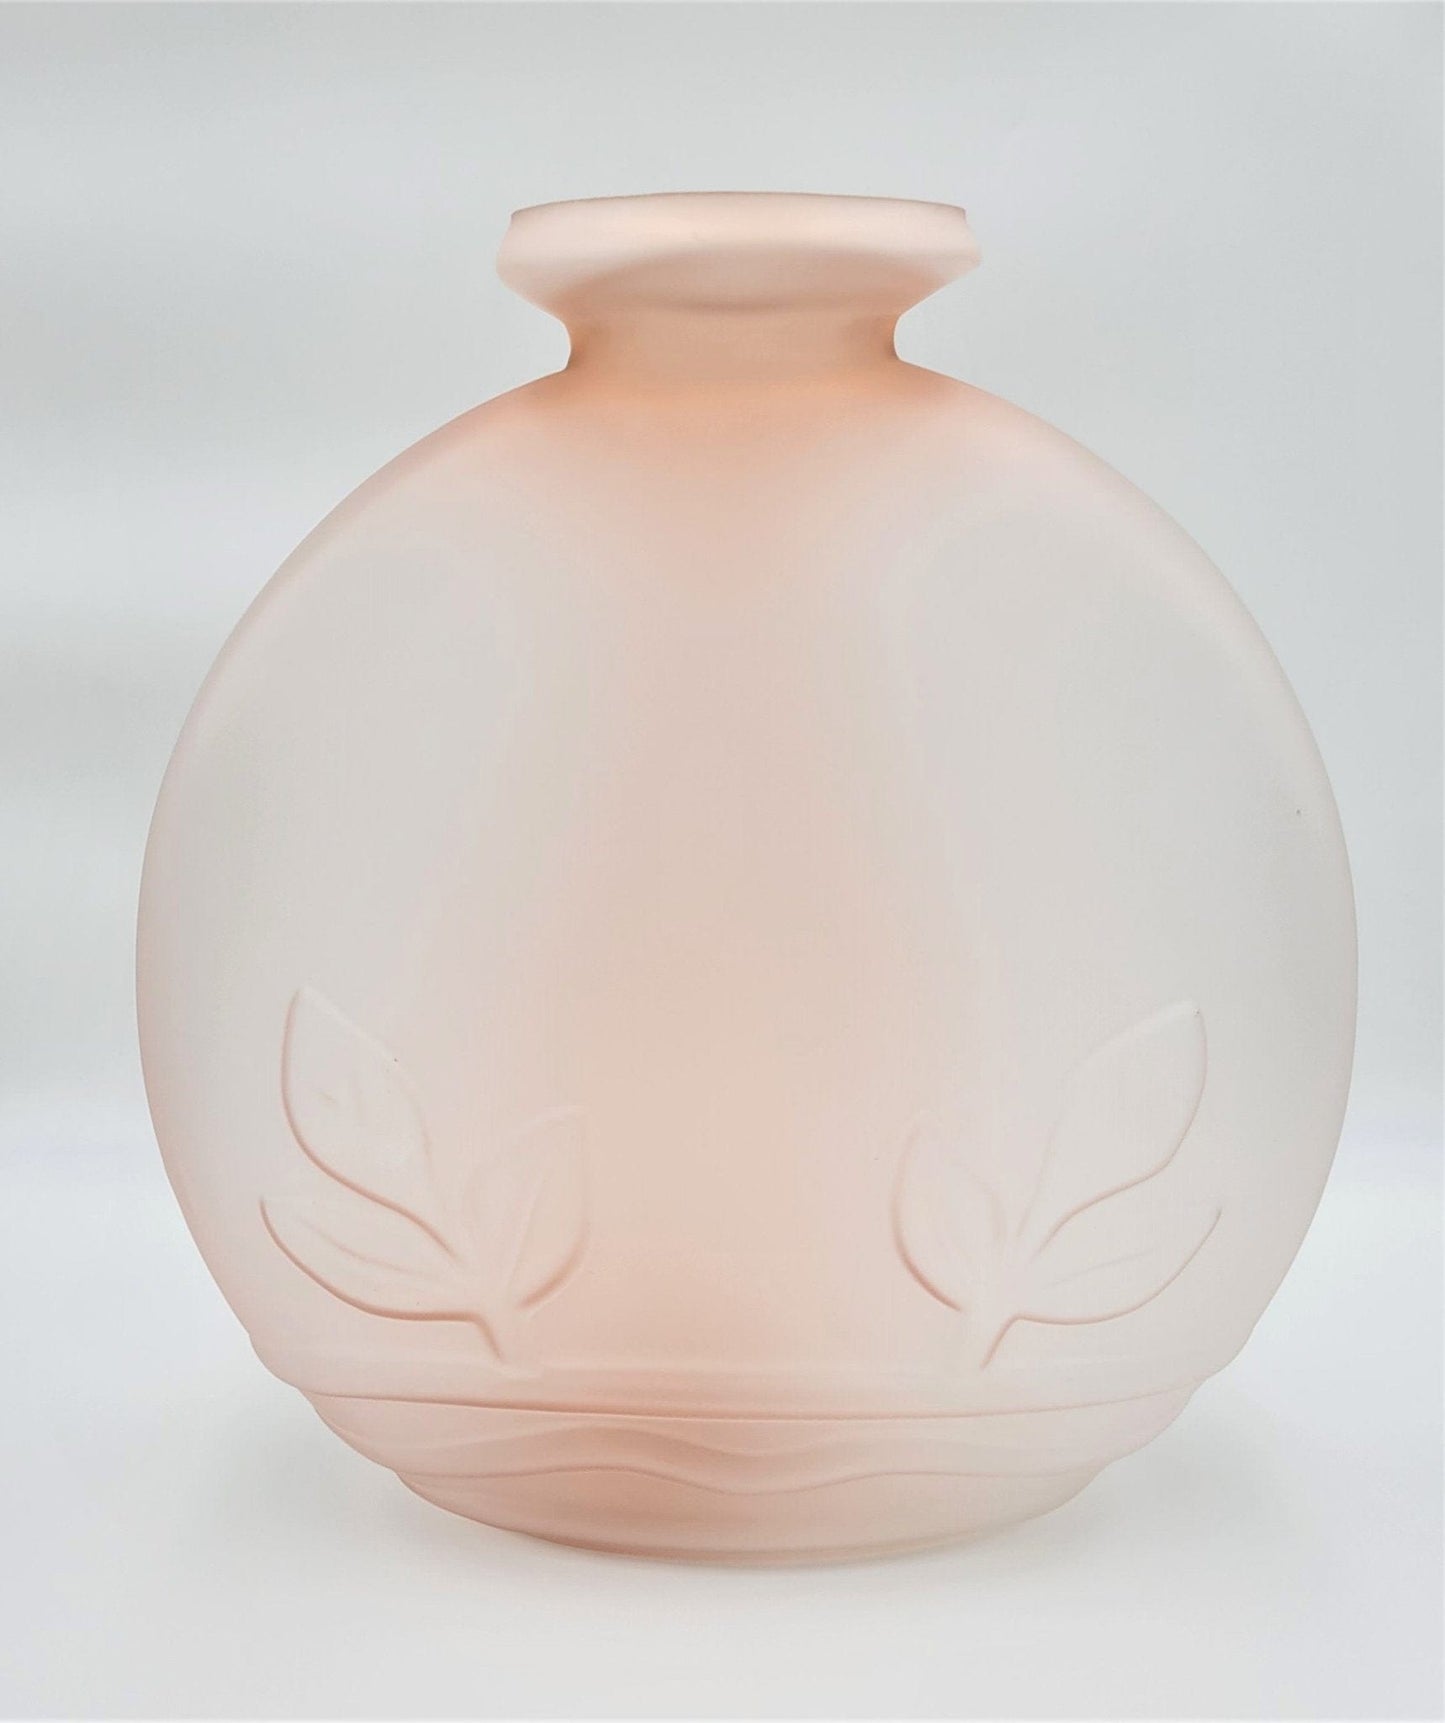 Dolbi Cashier HUGE! Dolbi Cashier Art Deco Pink Satin Glass Vase with raised floral accents 1980s